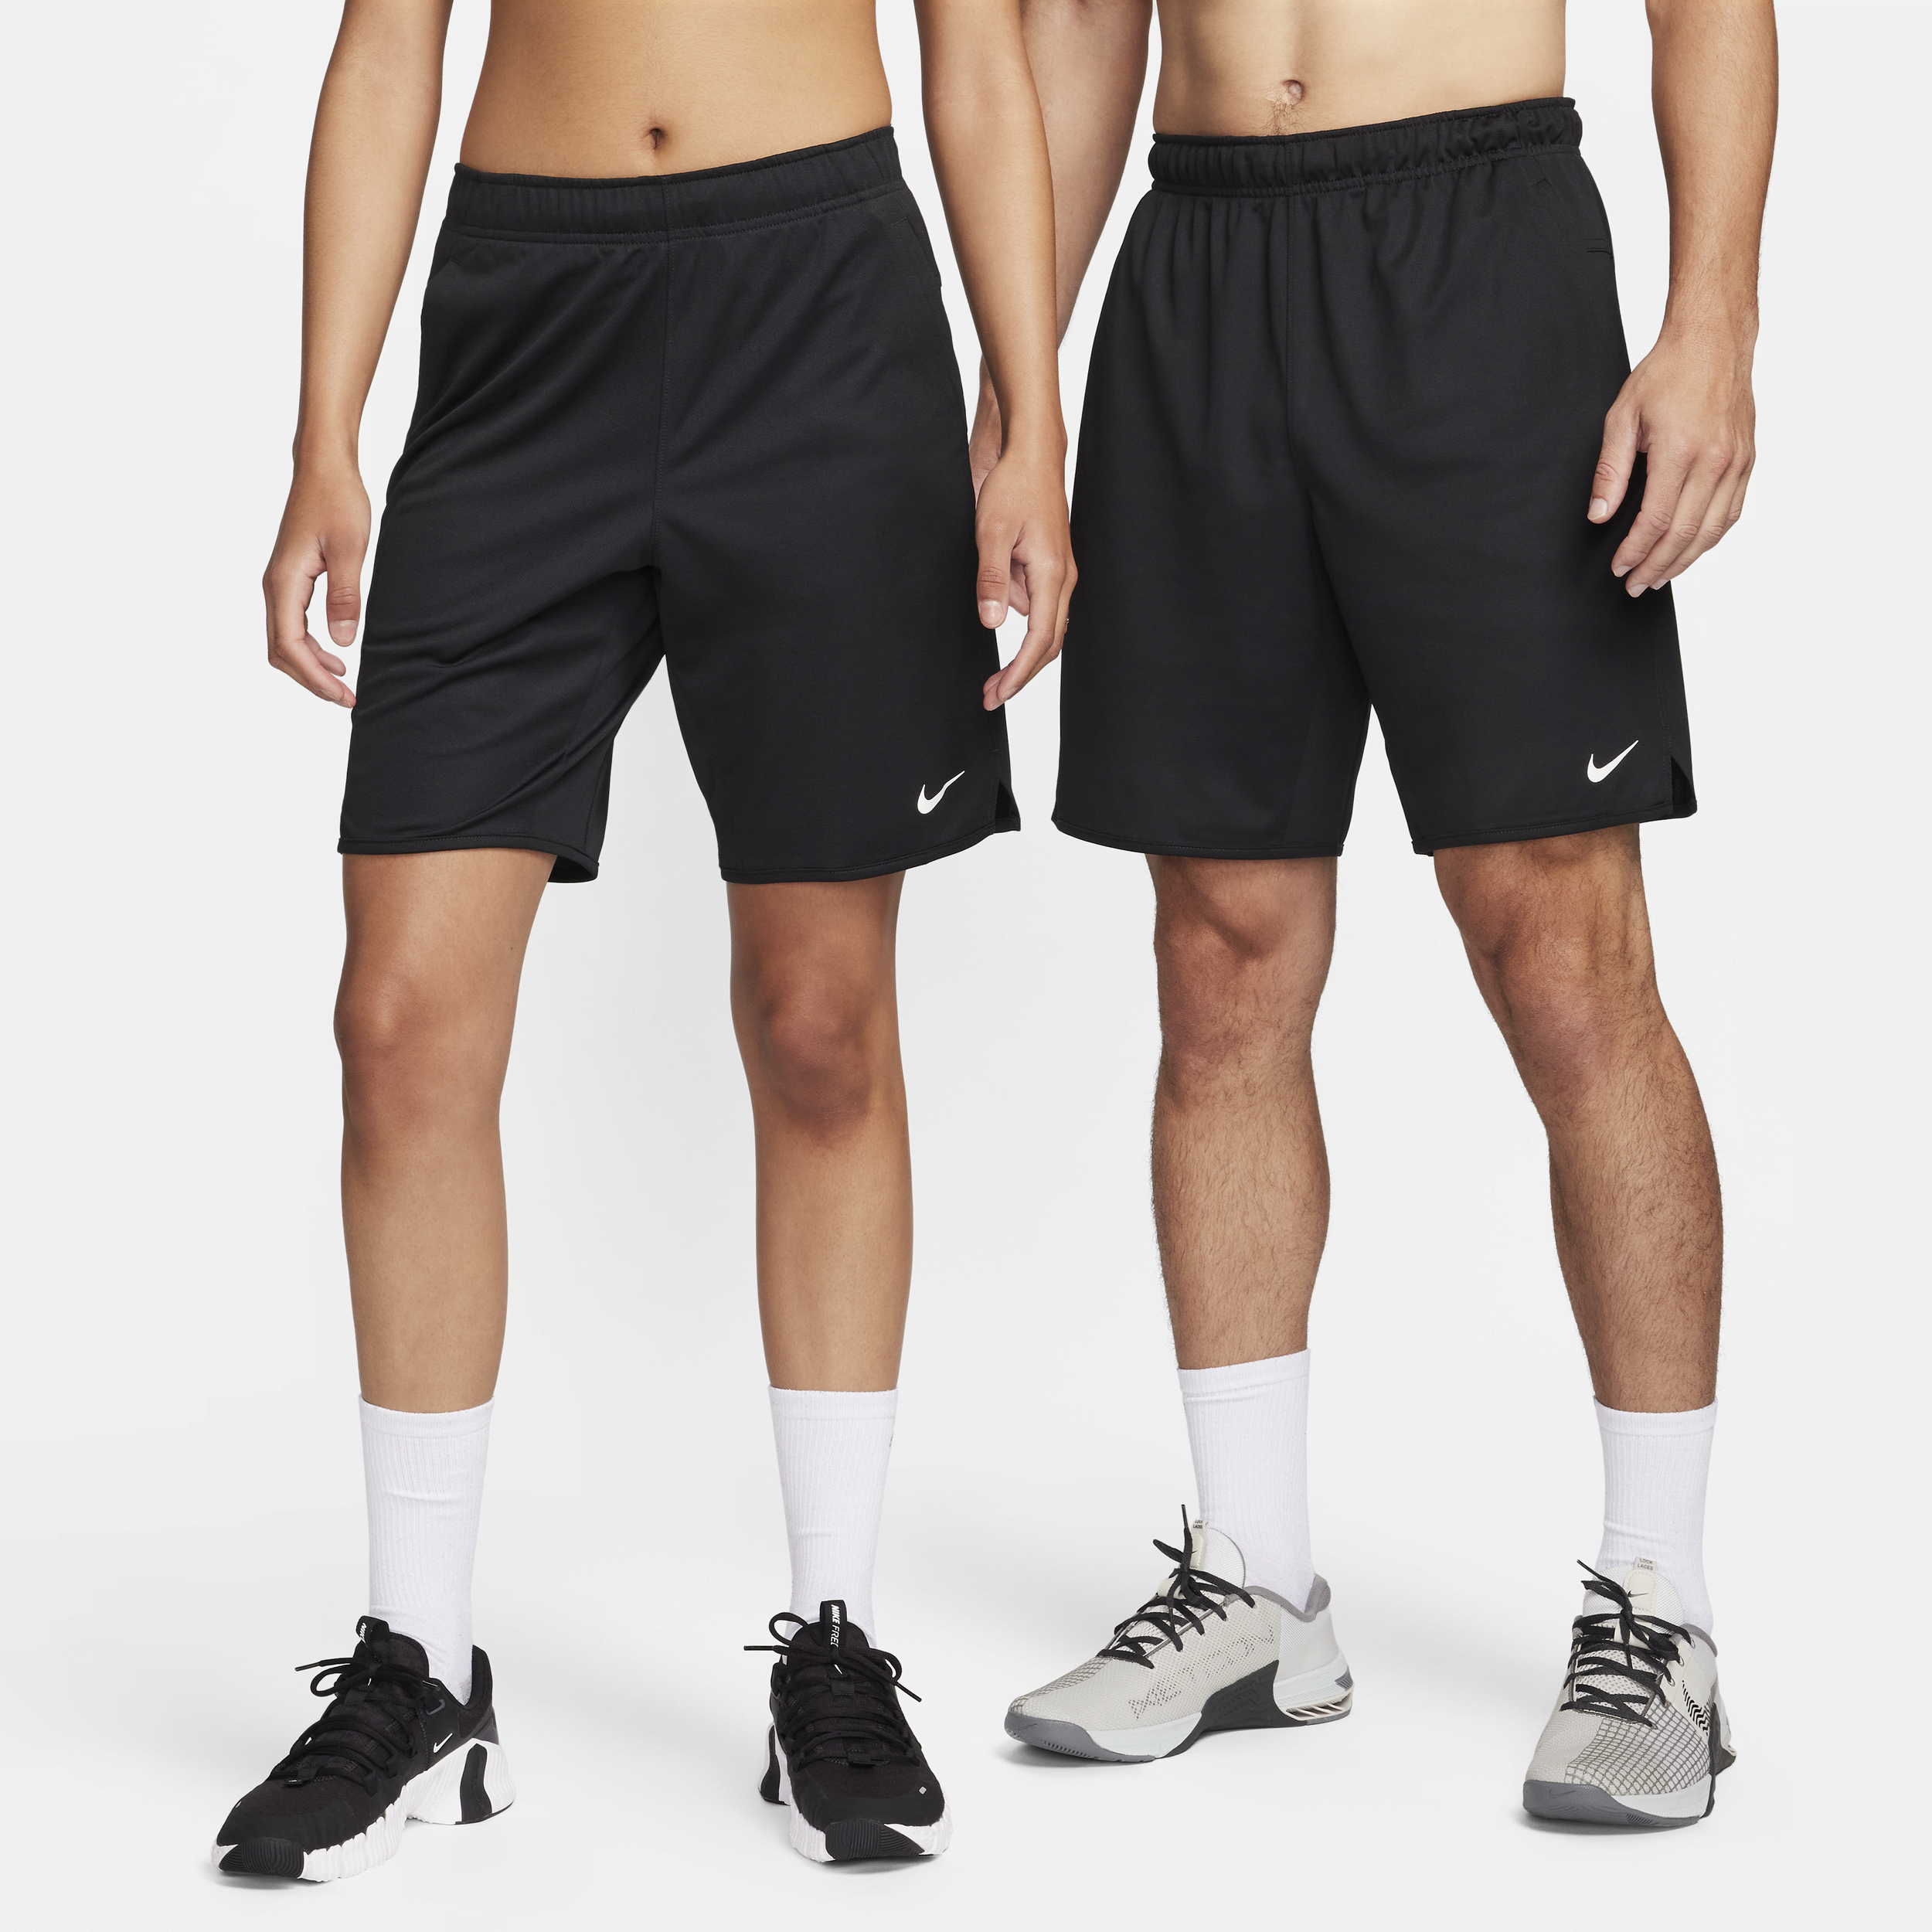 Shorts versatili non foderati Dri-FIT 23 cm Nike Totality – Uomo - Nero